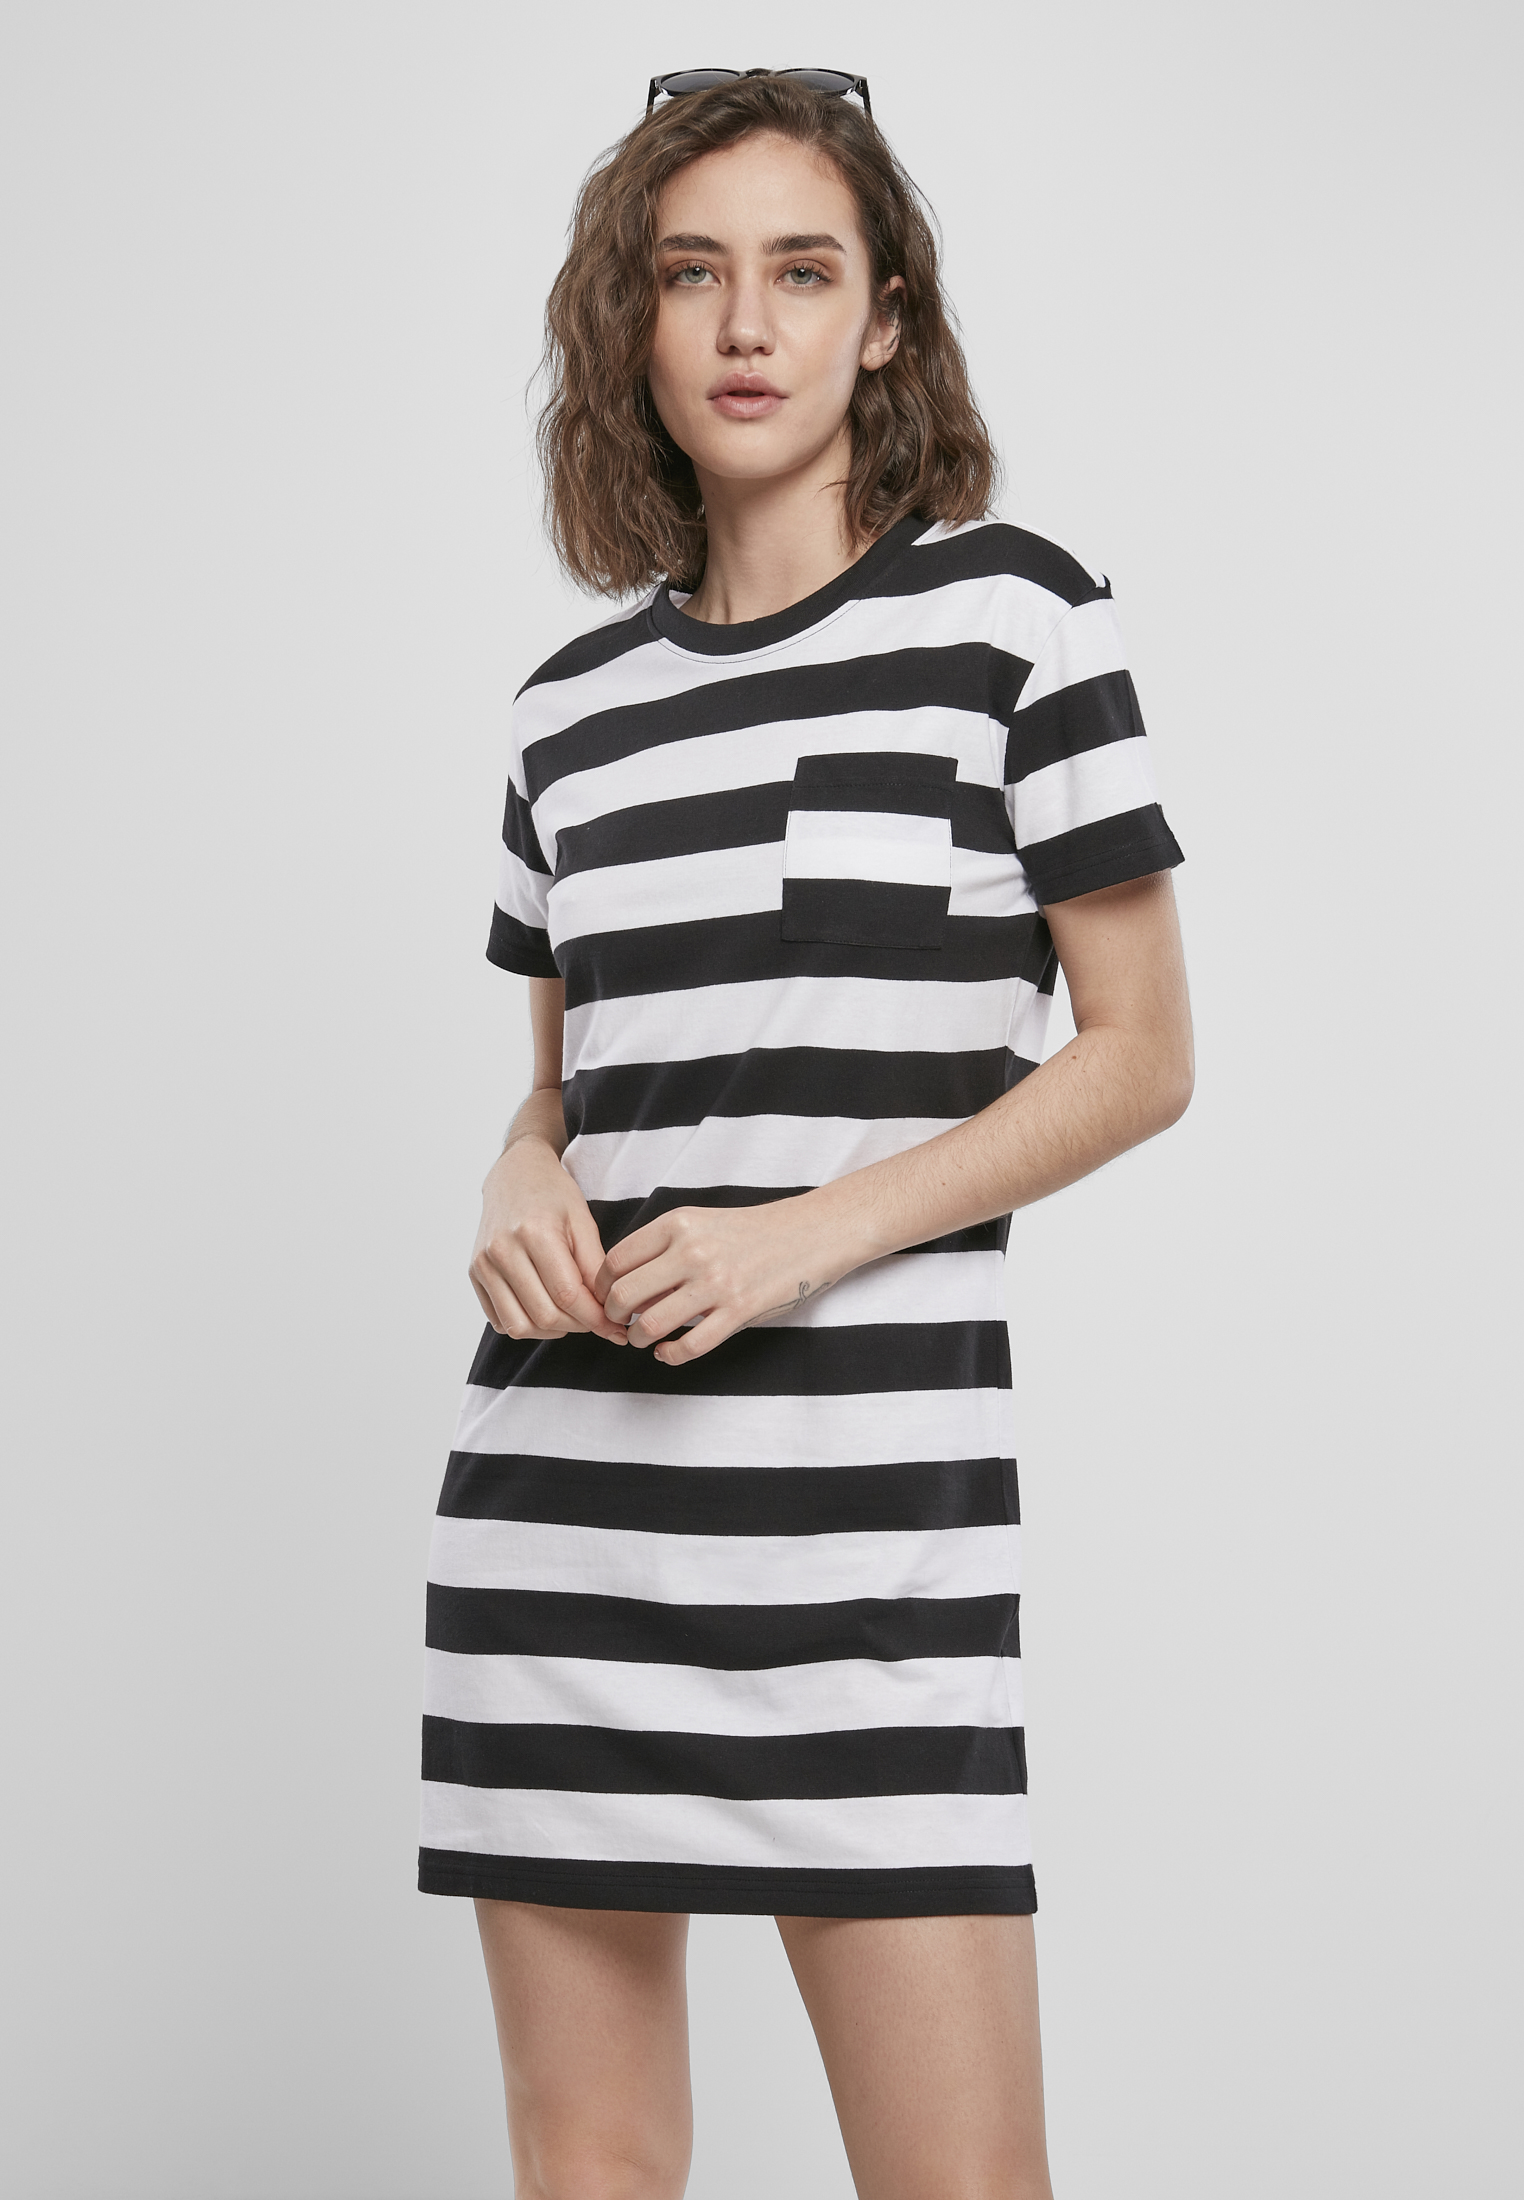 Women's T-shirt with stripes, black/white